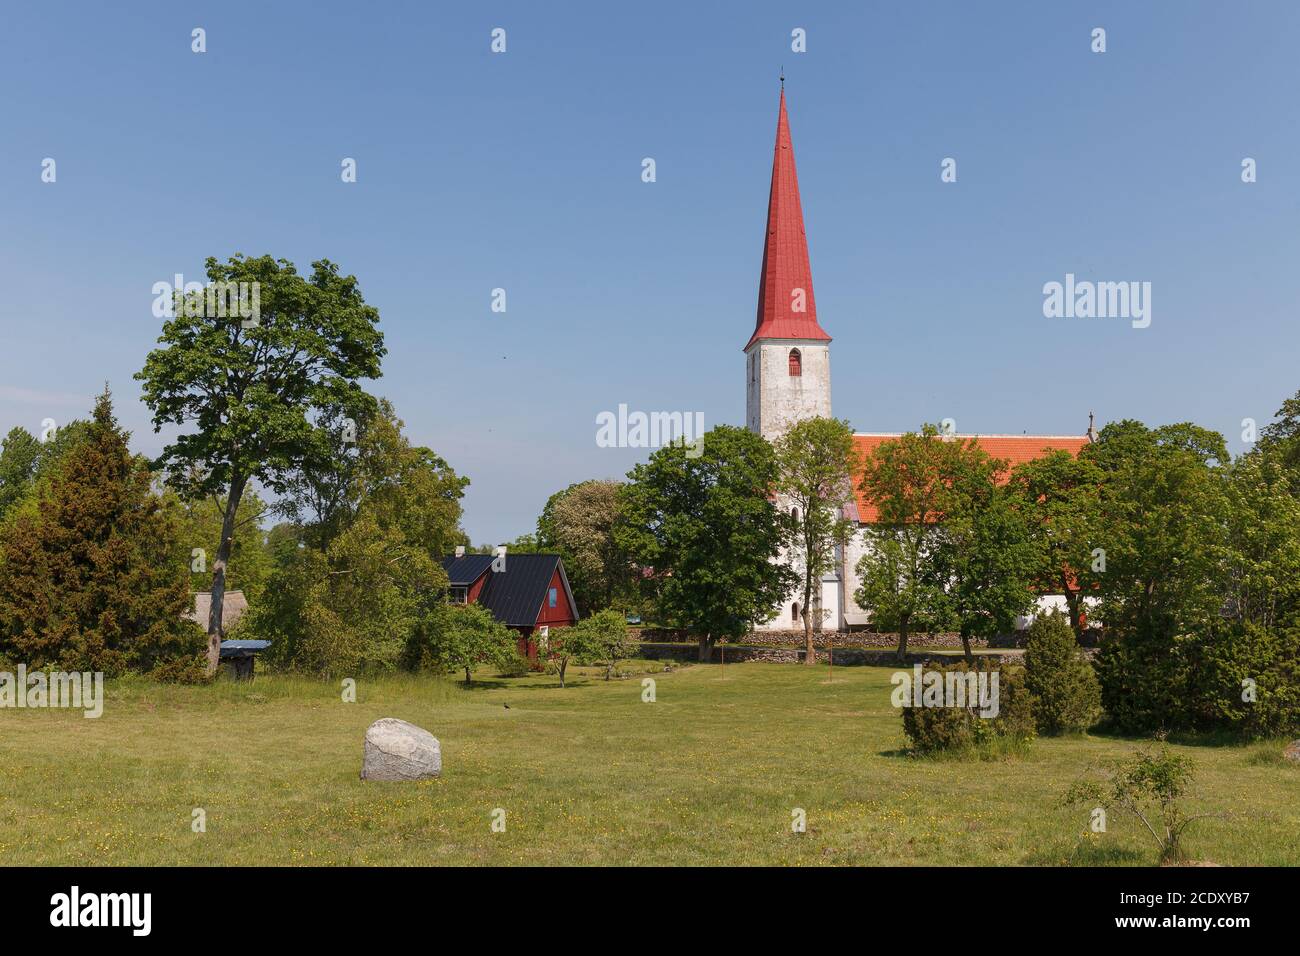 Ancient Lutheran church in Kihelkonna, Saaremaa, Estonia. Early autumn sunny day. Landscape view. Stock Photo